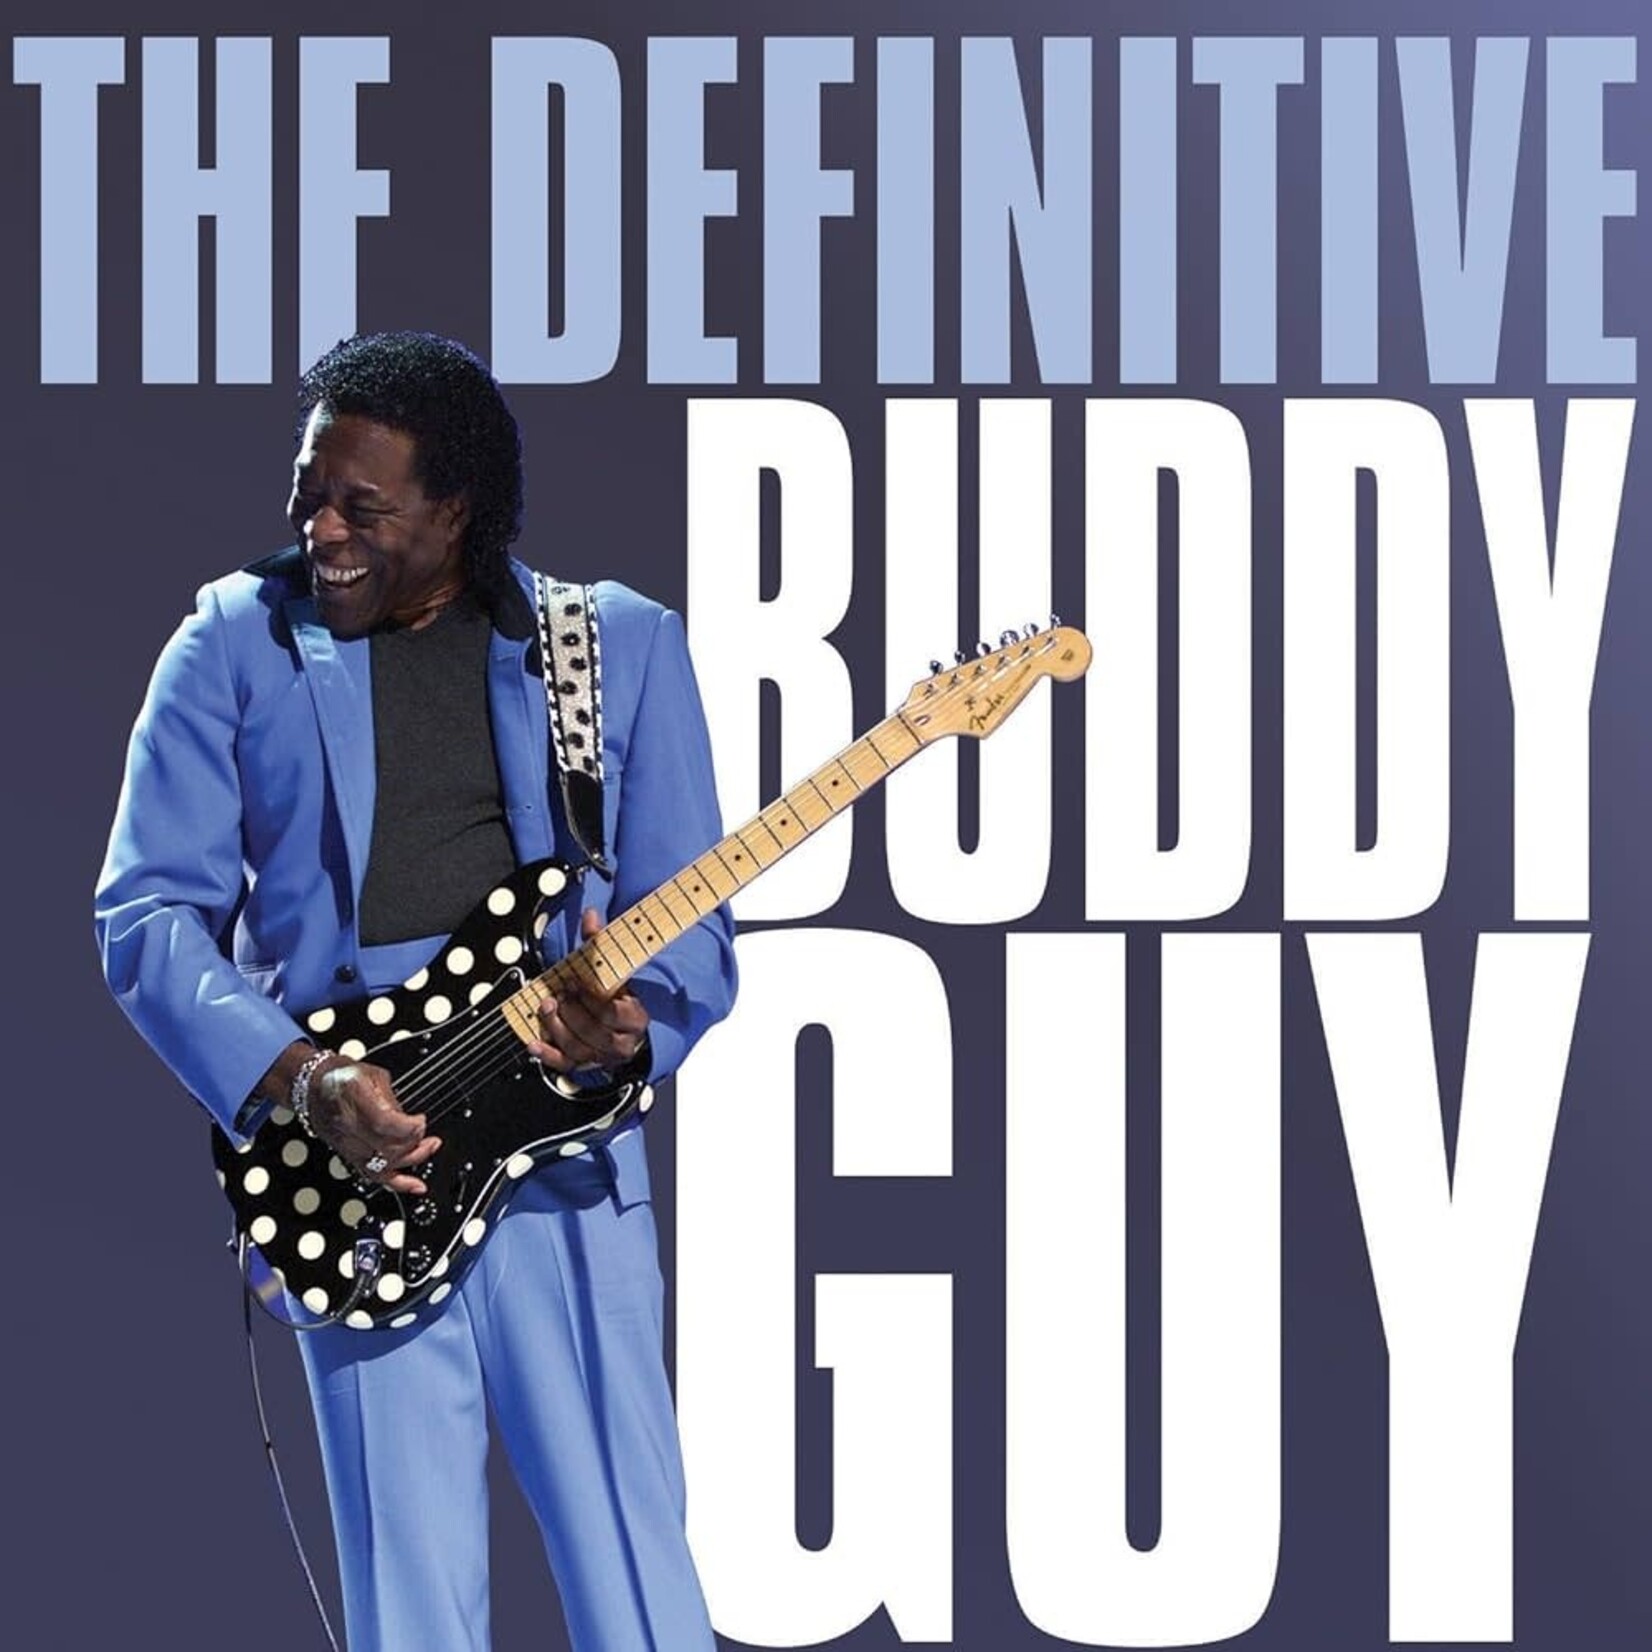 Buddy Guy - The Definitive Buddy Guy [CD]